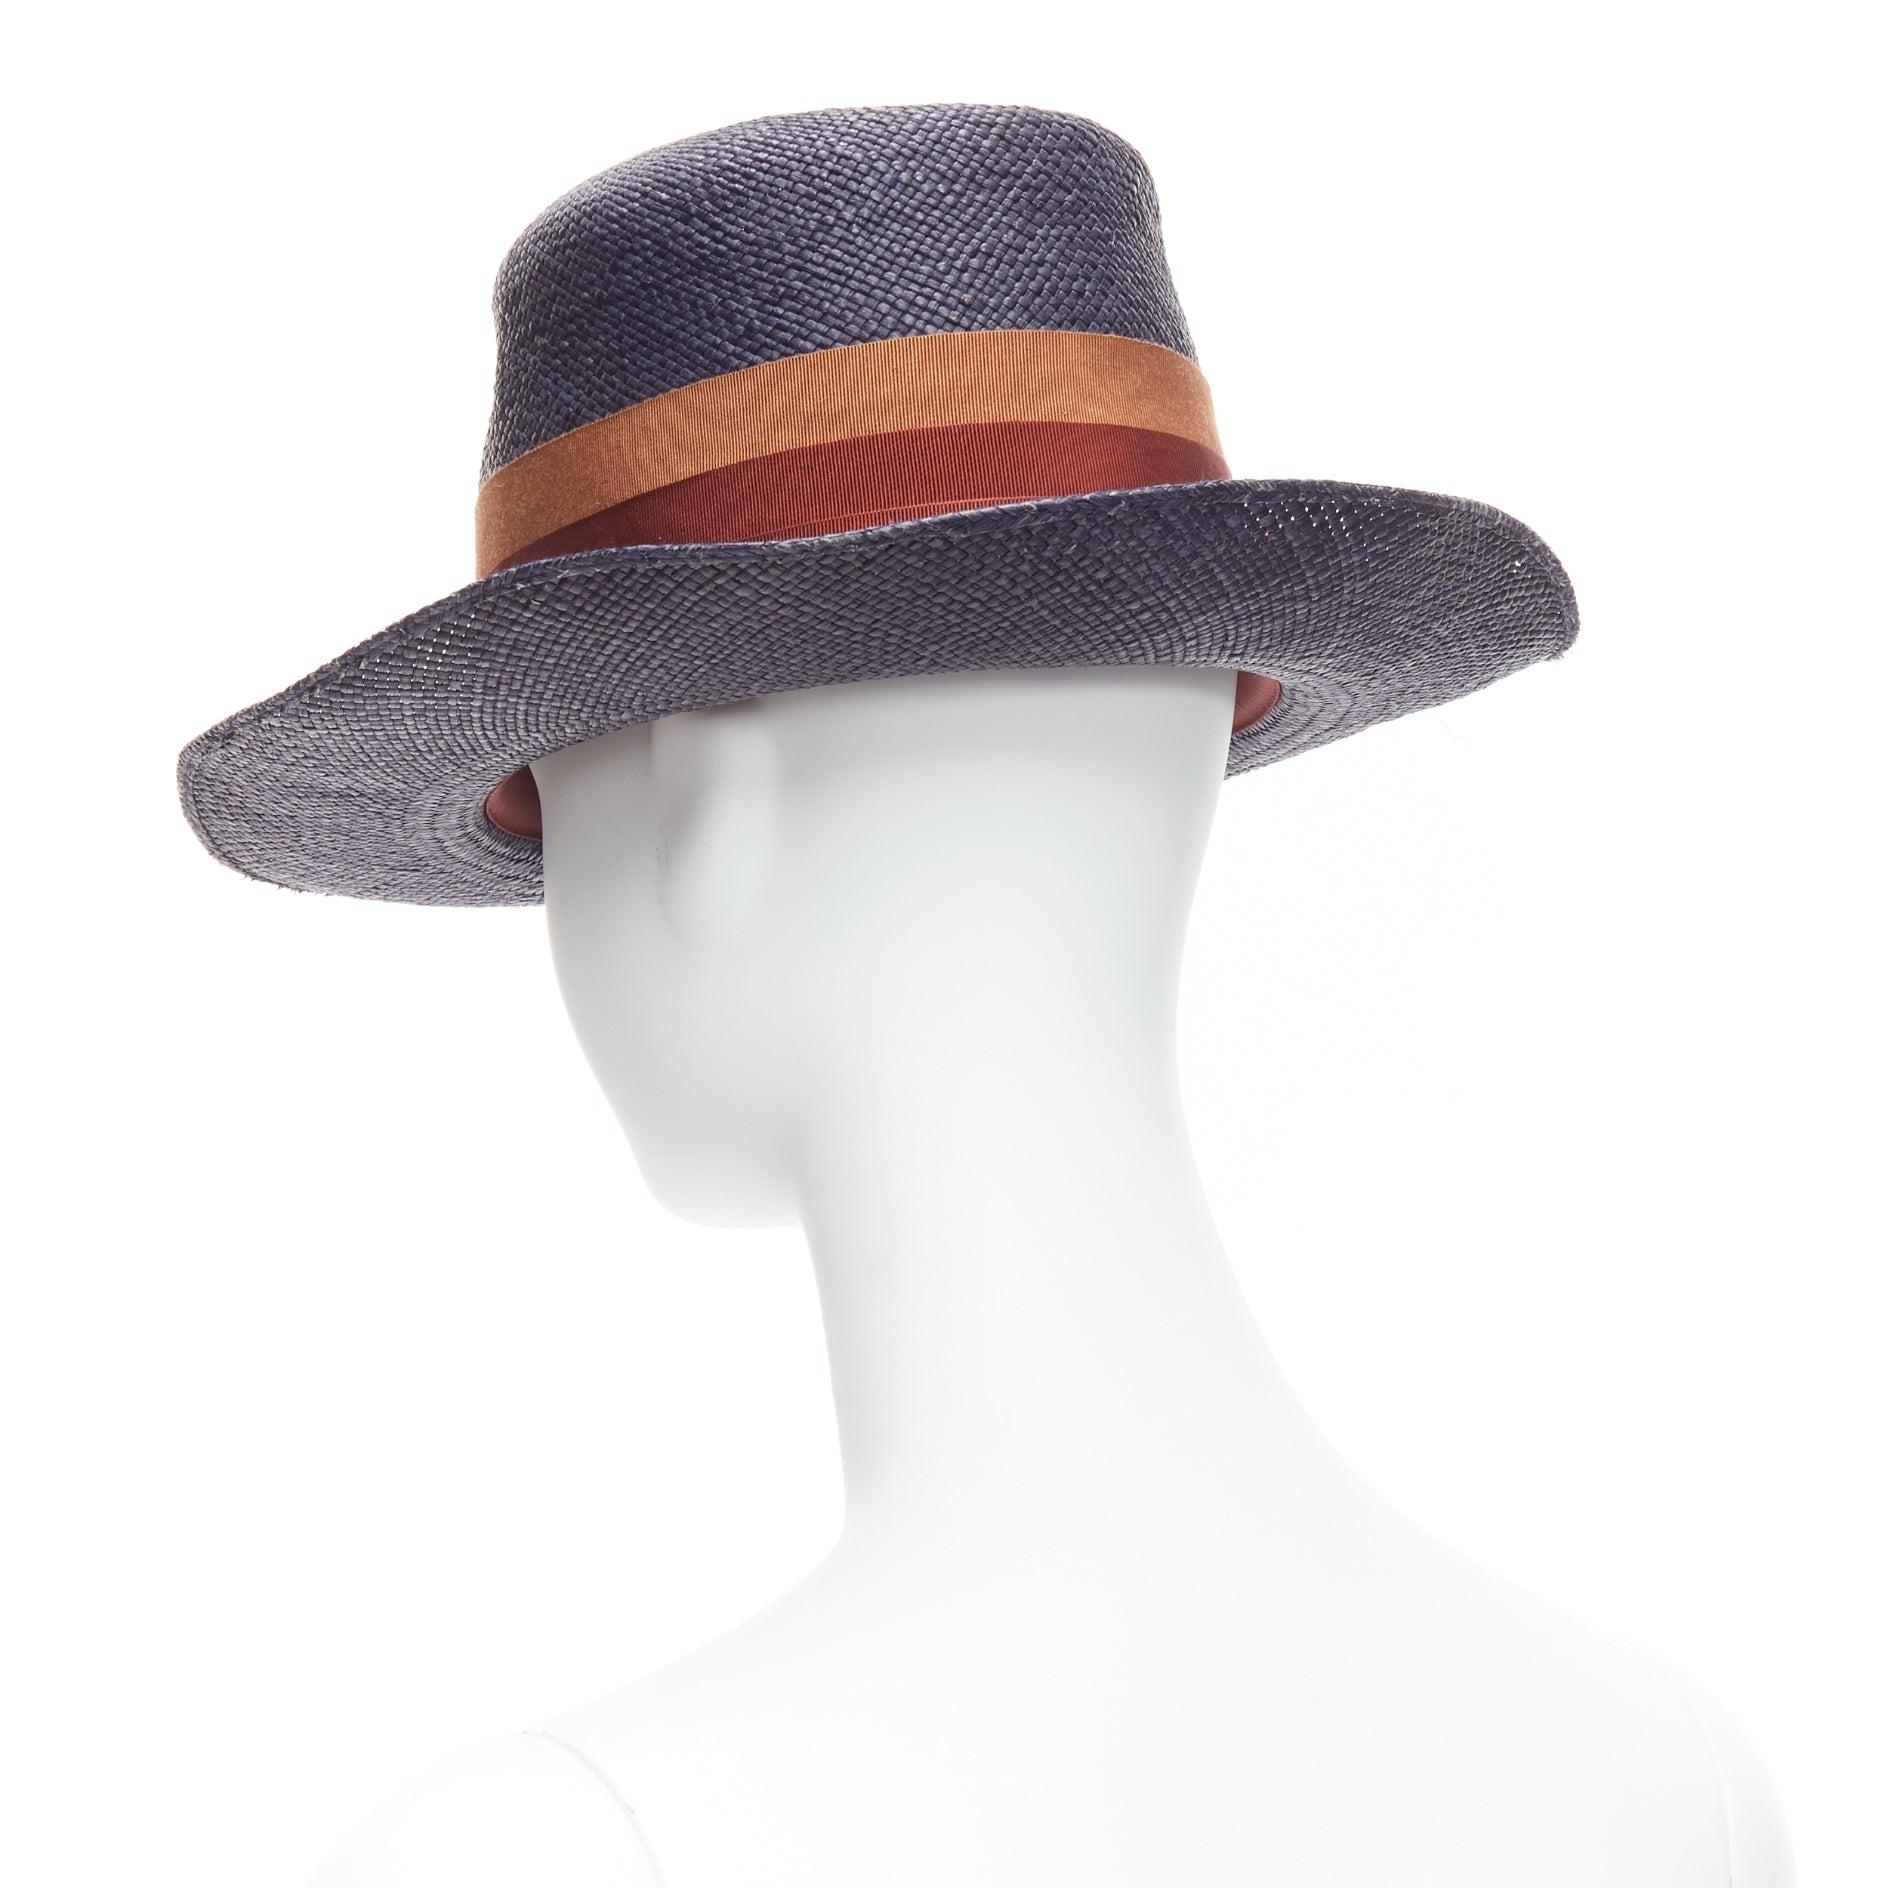 LANVIN 2015 Alber Elbaz red flower brown web ribbon navy straw fedora hat M For Sale 1